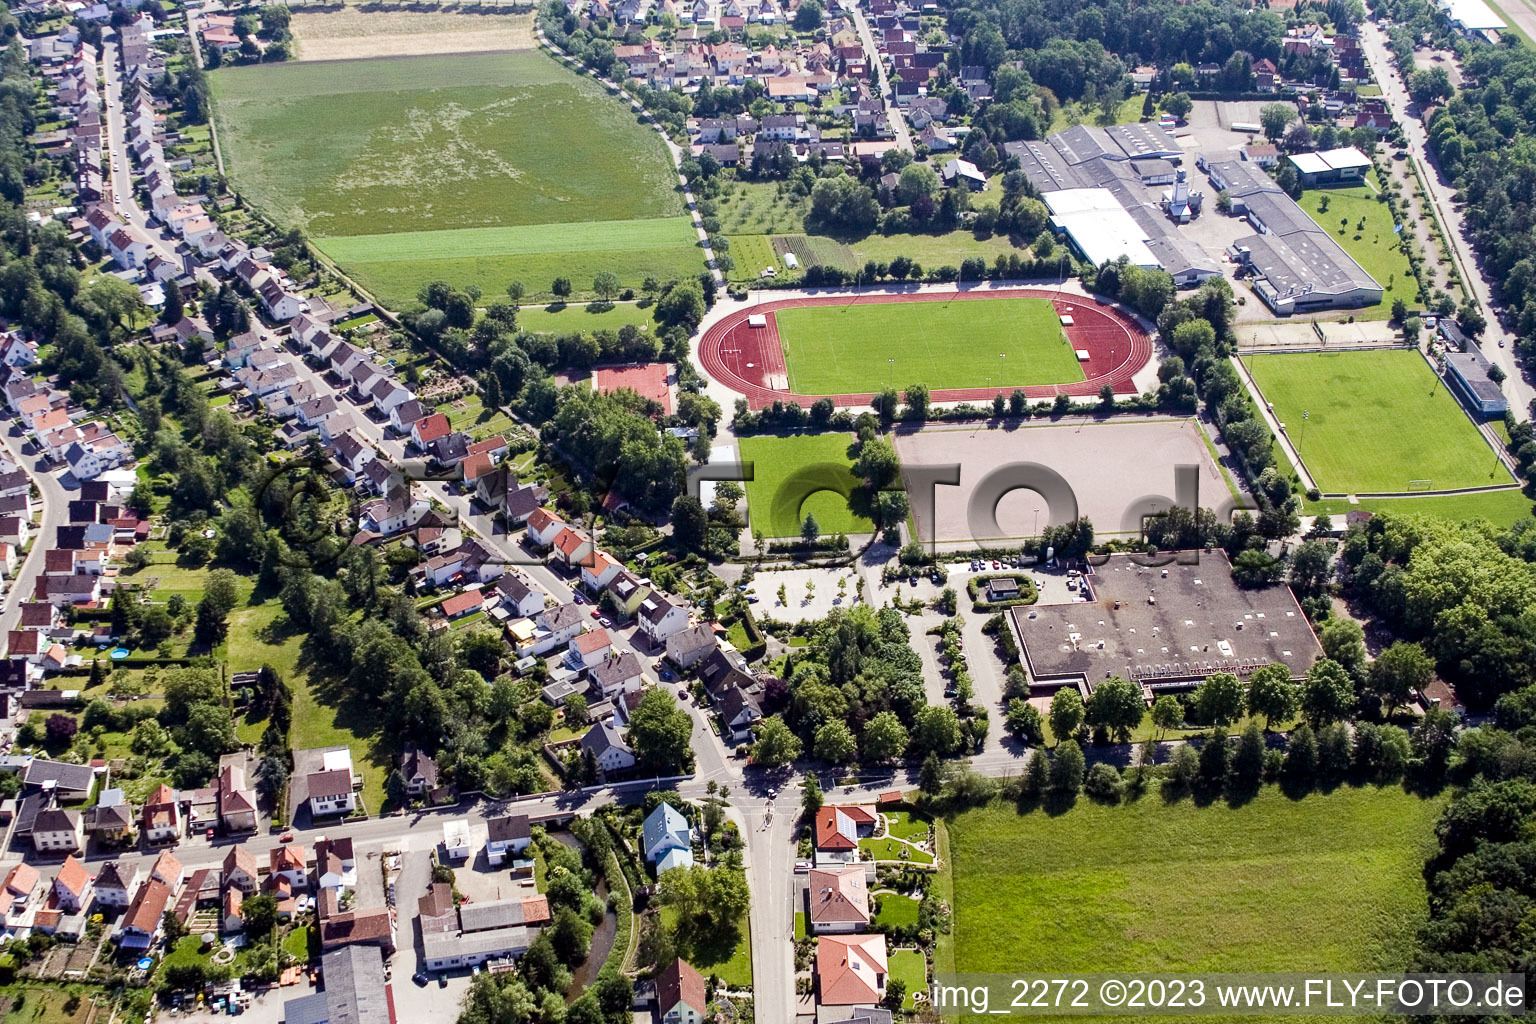 Central sports facility in the district Herxheim in Herxheim bei Landau/Pfalz in the state Rhineland-Palatinate, Germany